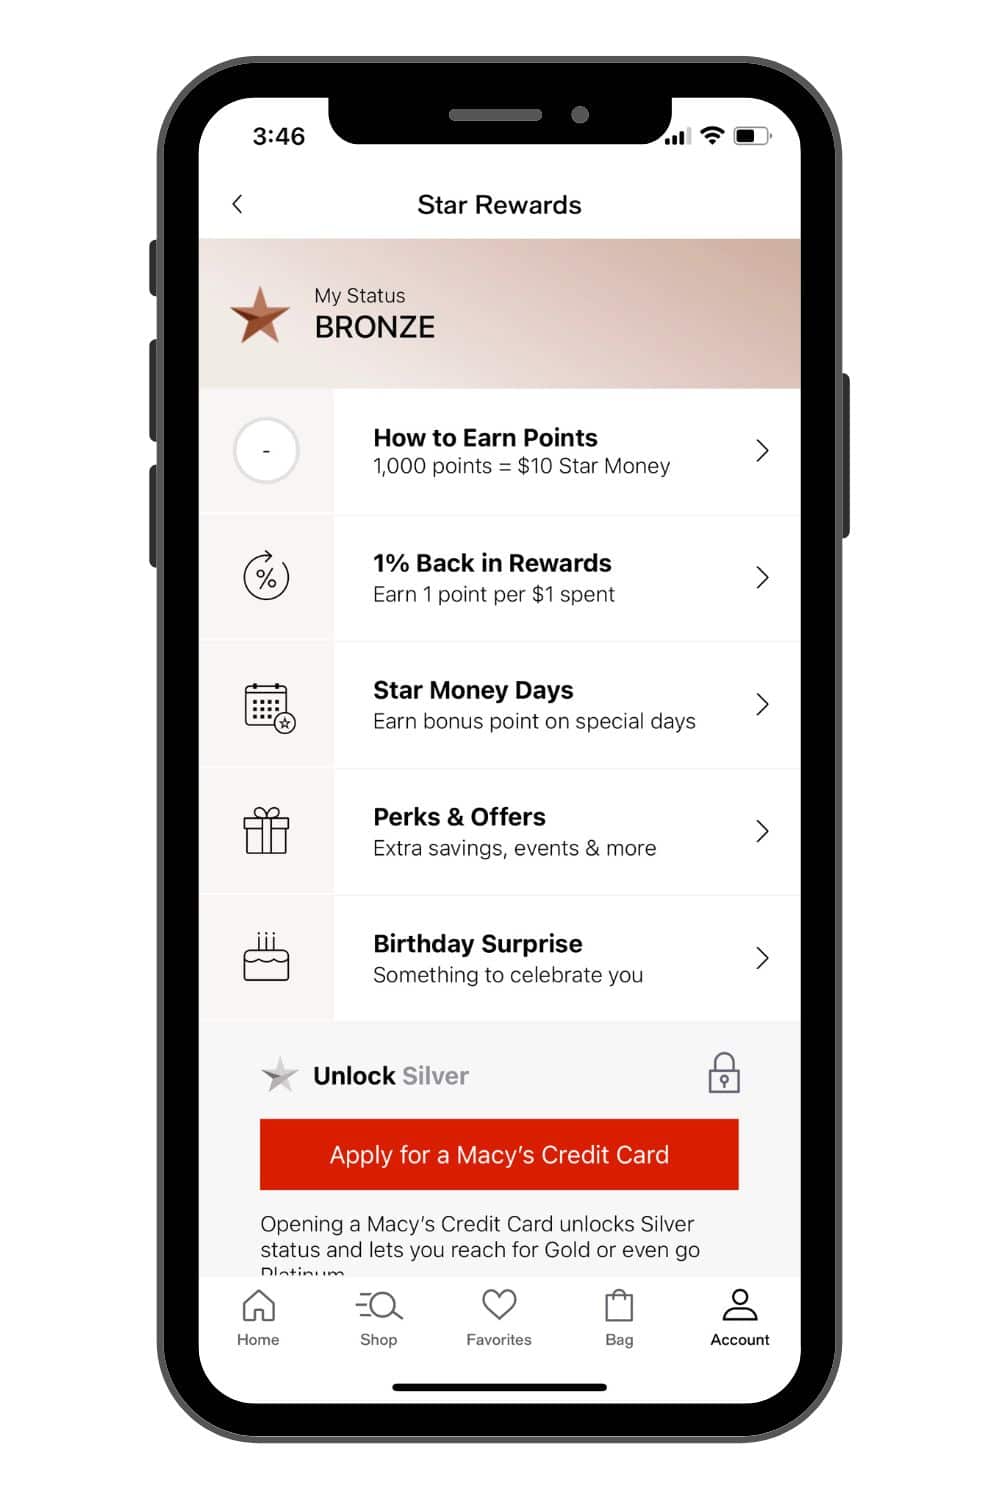 Macy's Star Rewards screen in Macy's app.